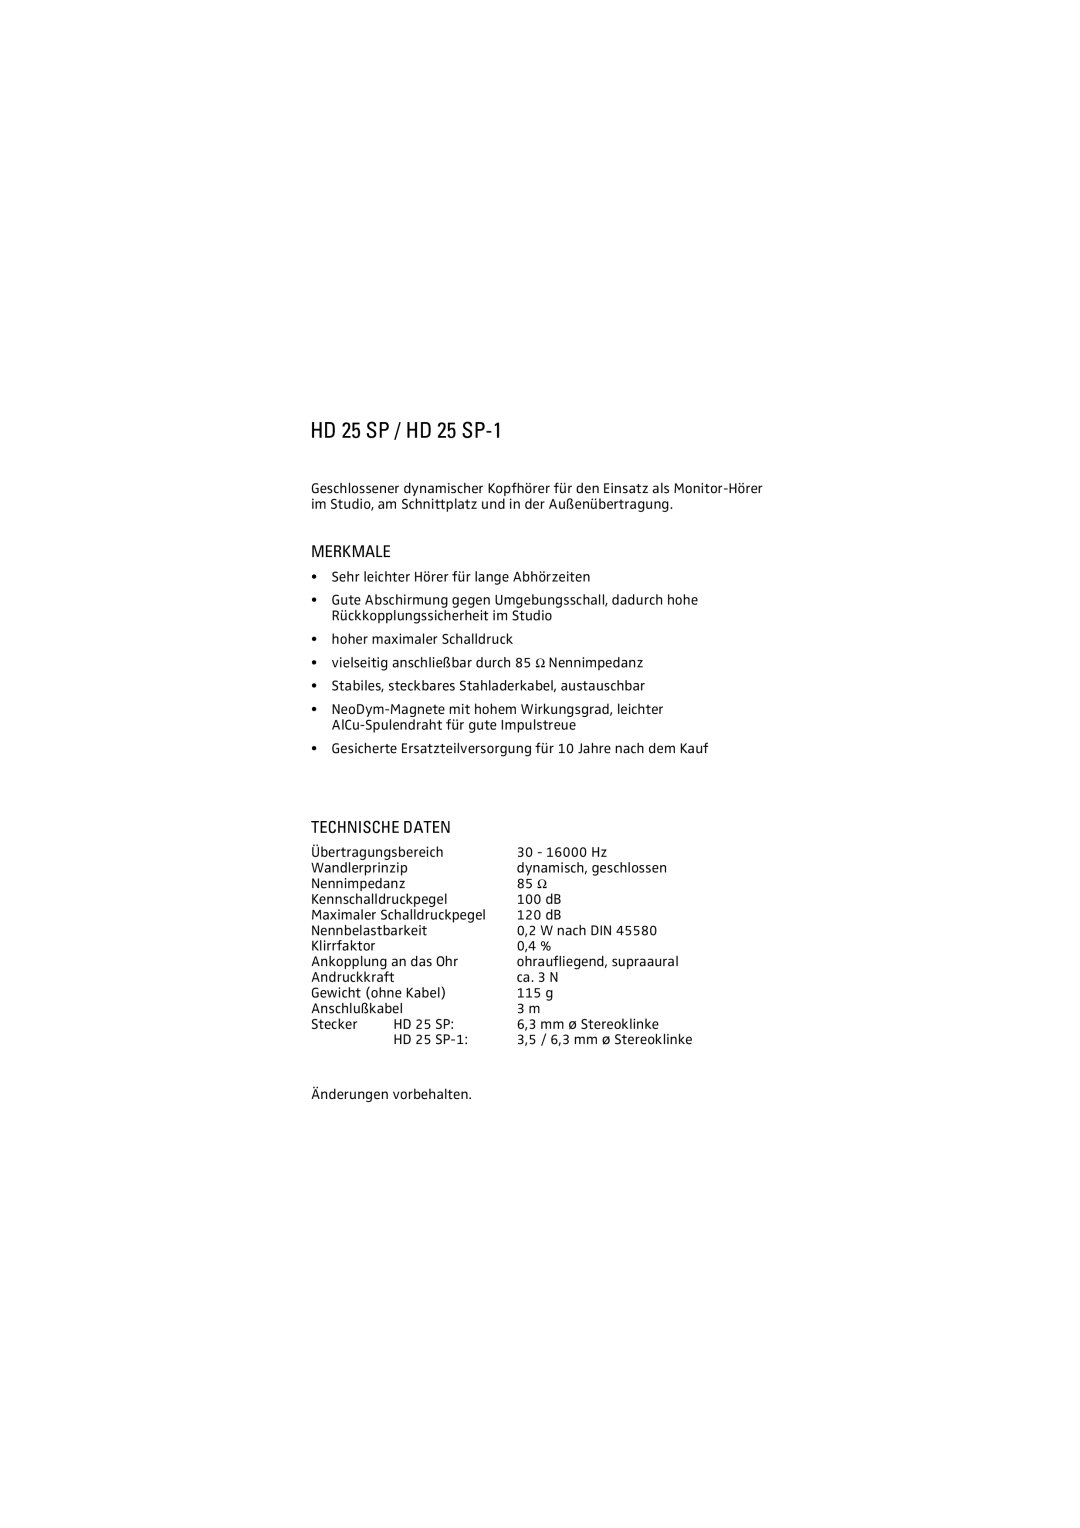 Sennheiser manual HD 25 SP / HD 25 SP-1, Merkmale, Technische Daten 